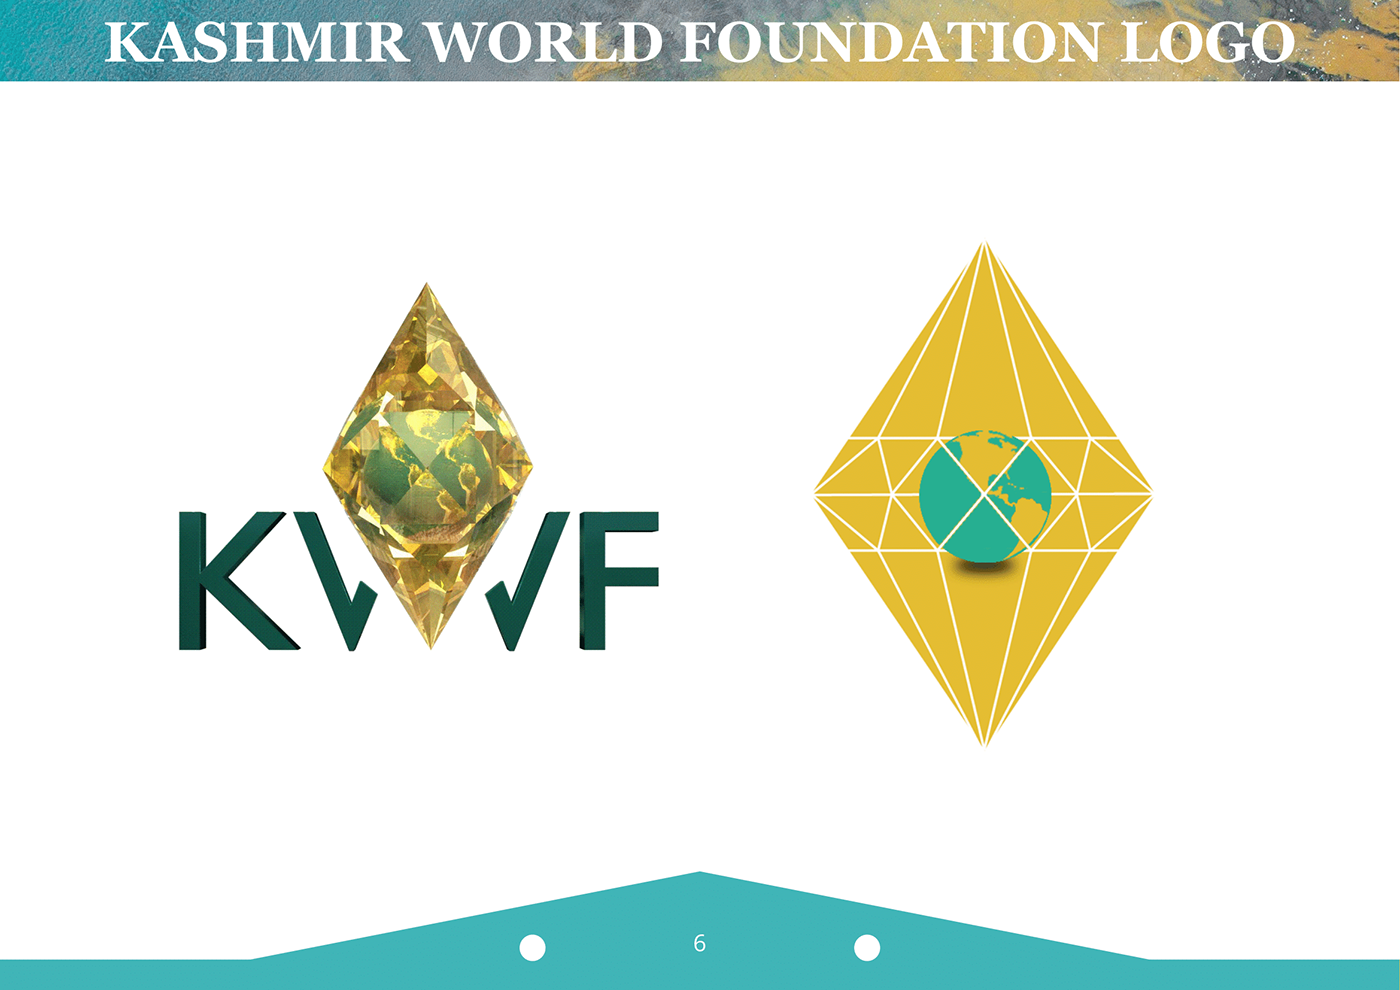 Brand style branding  logo Style Guide KWF kashmir world foundation conservation future academy robotics